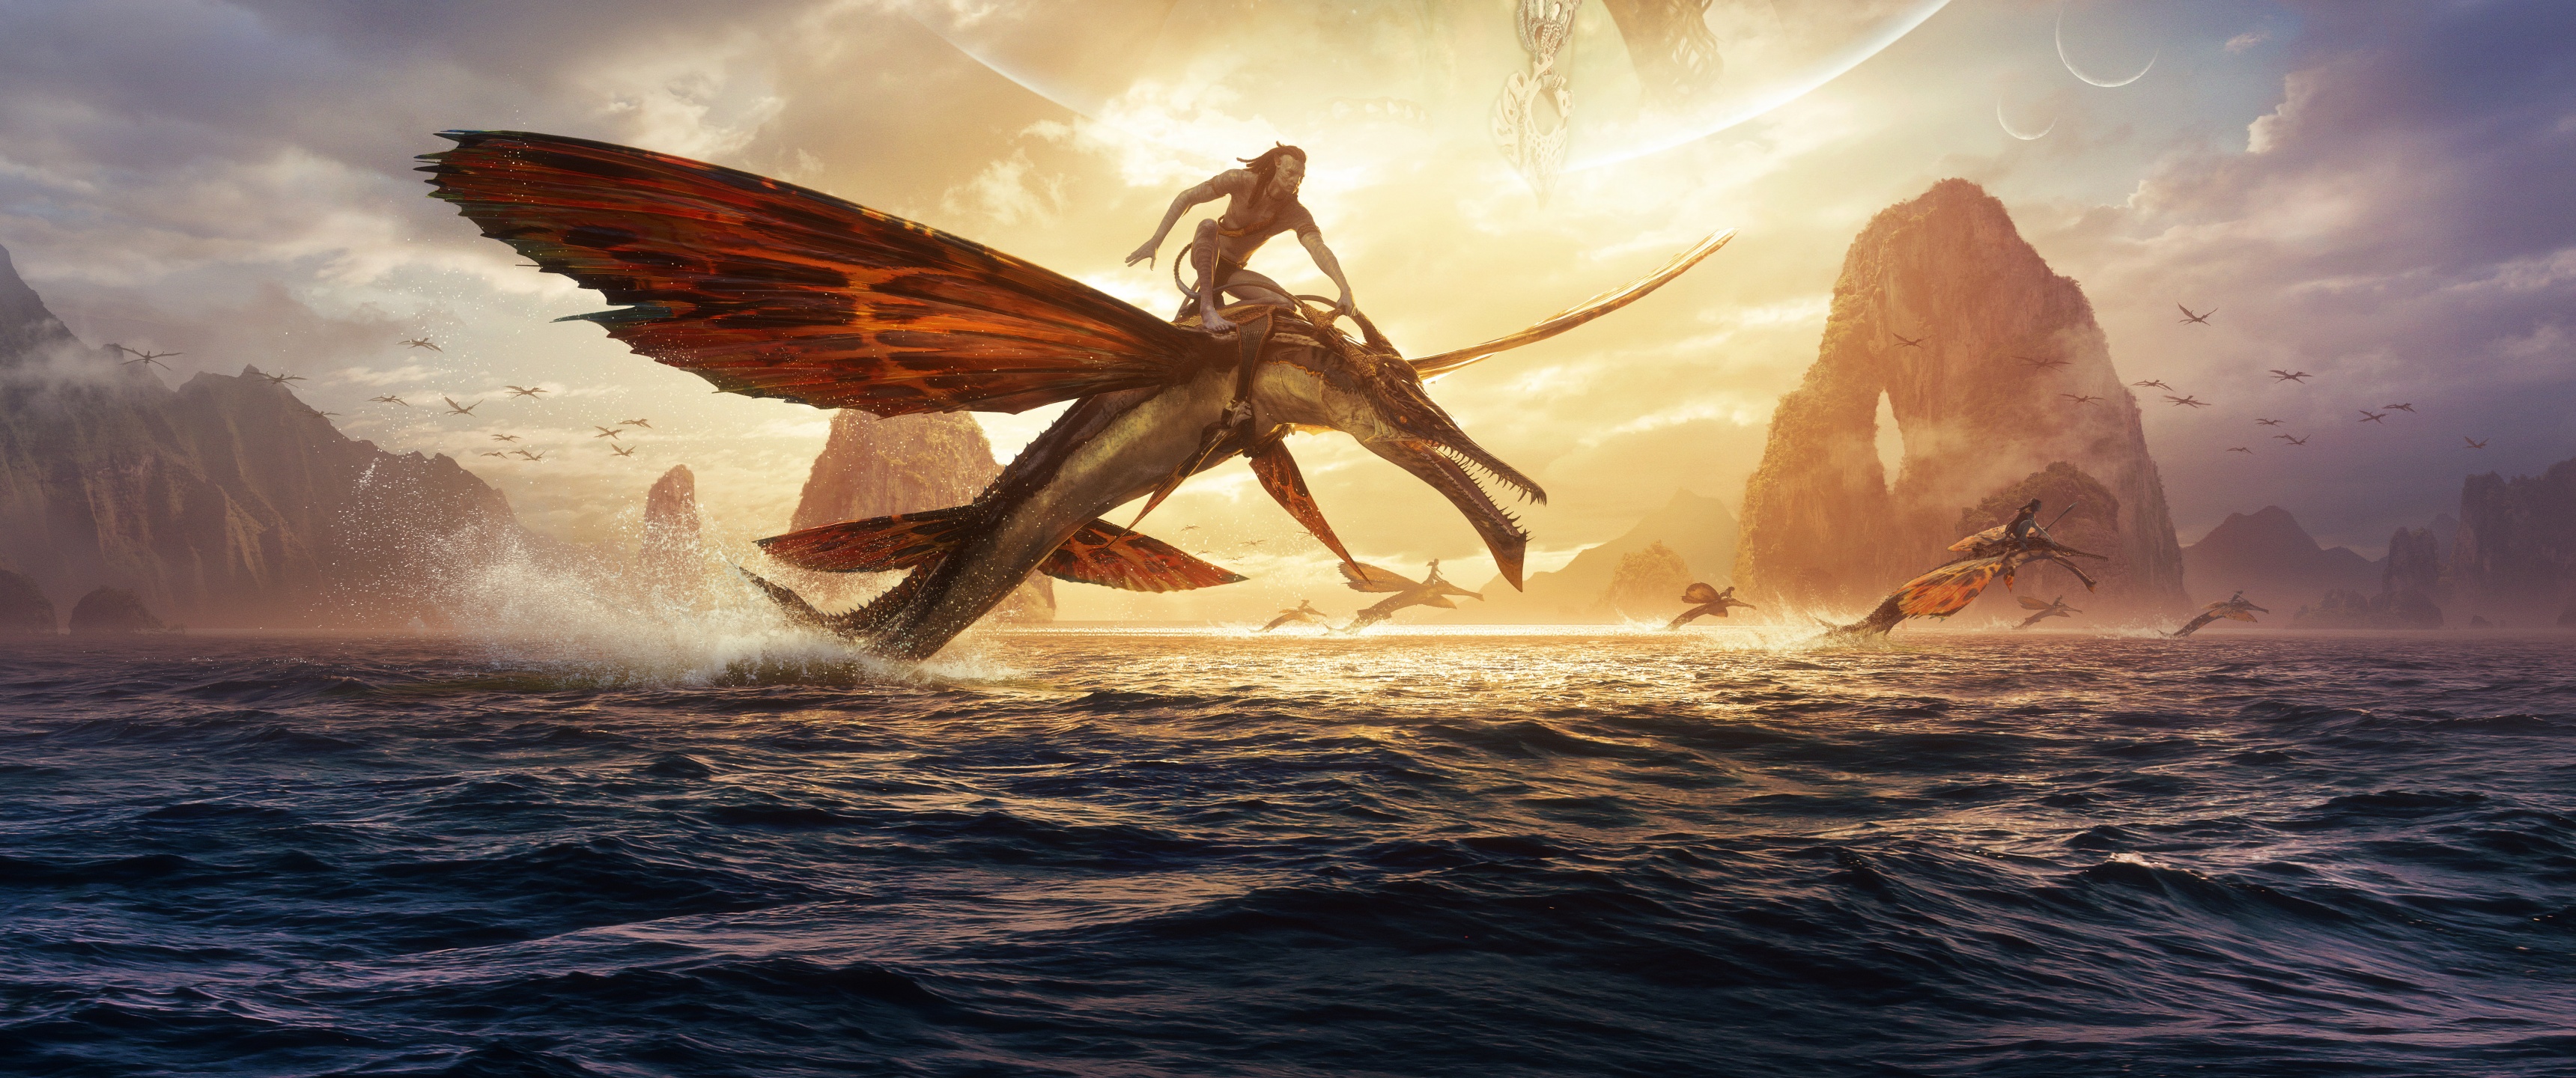 Avatar: The Way of Water Wallpaper 4K, 2022 Movies, Avatar Movies